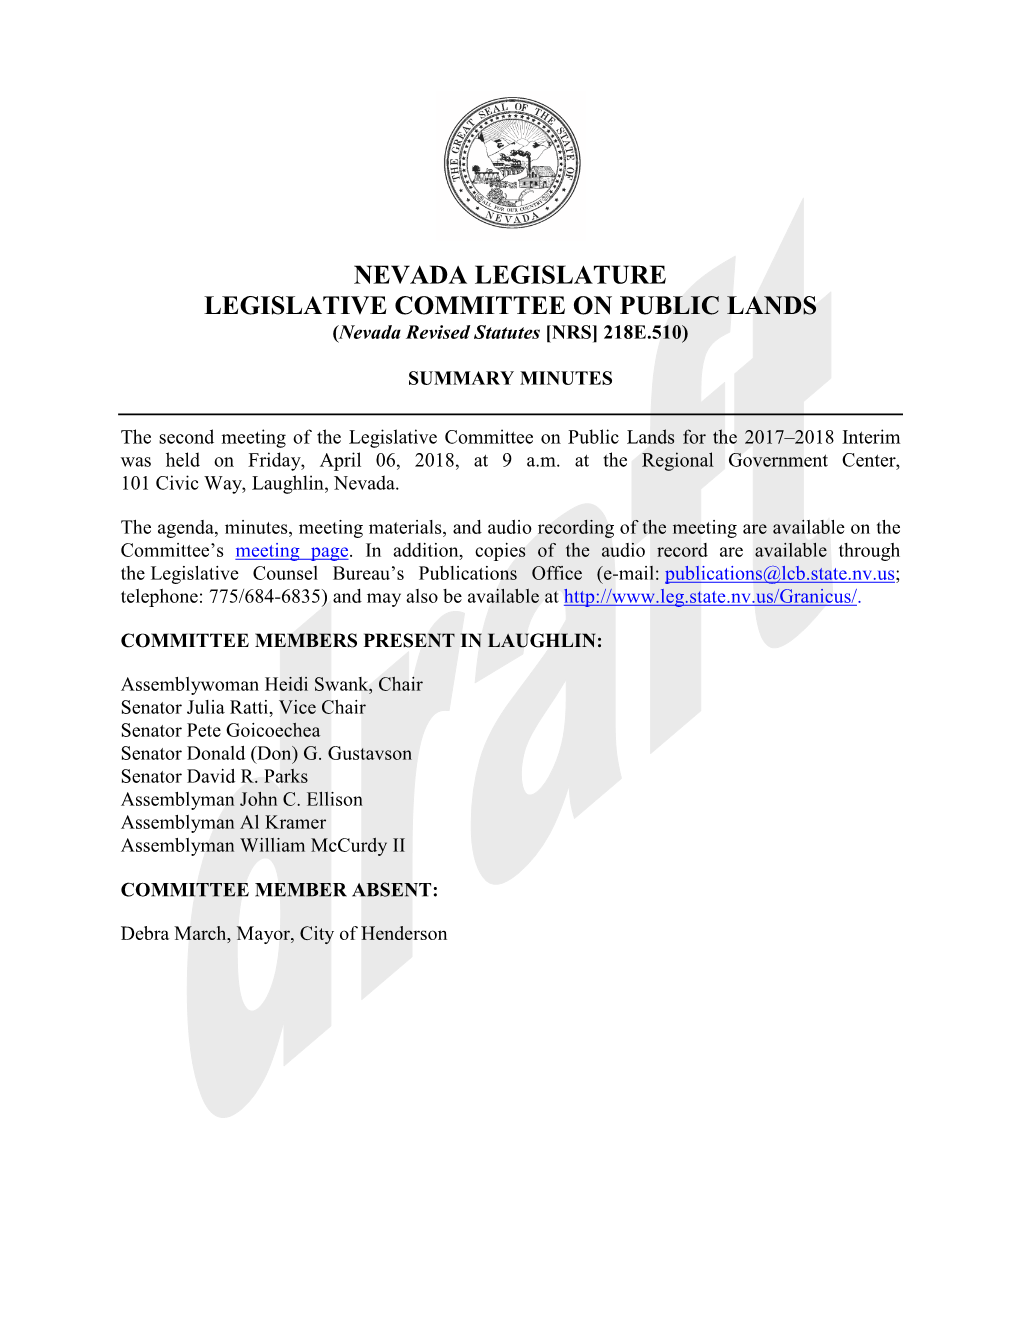 NEVADA LEGISLATURE LEGISLATIVE COMMITTEE on PUBLIC LANDS (Nevada Revised Statutes [NRS] 218E.510)